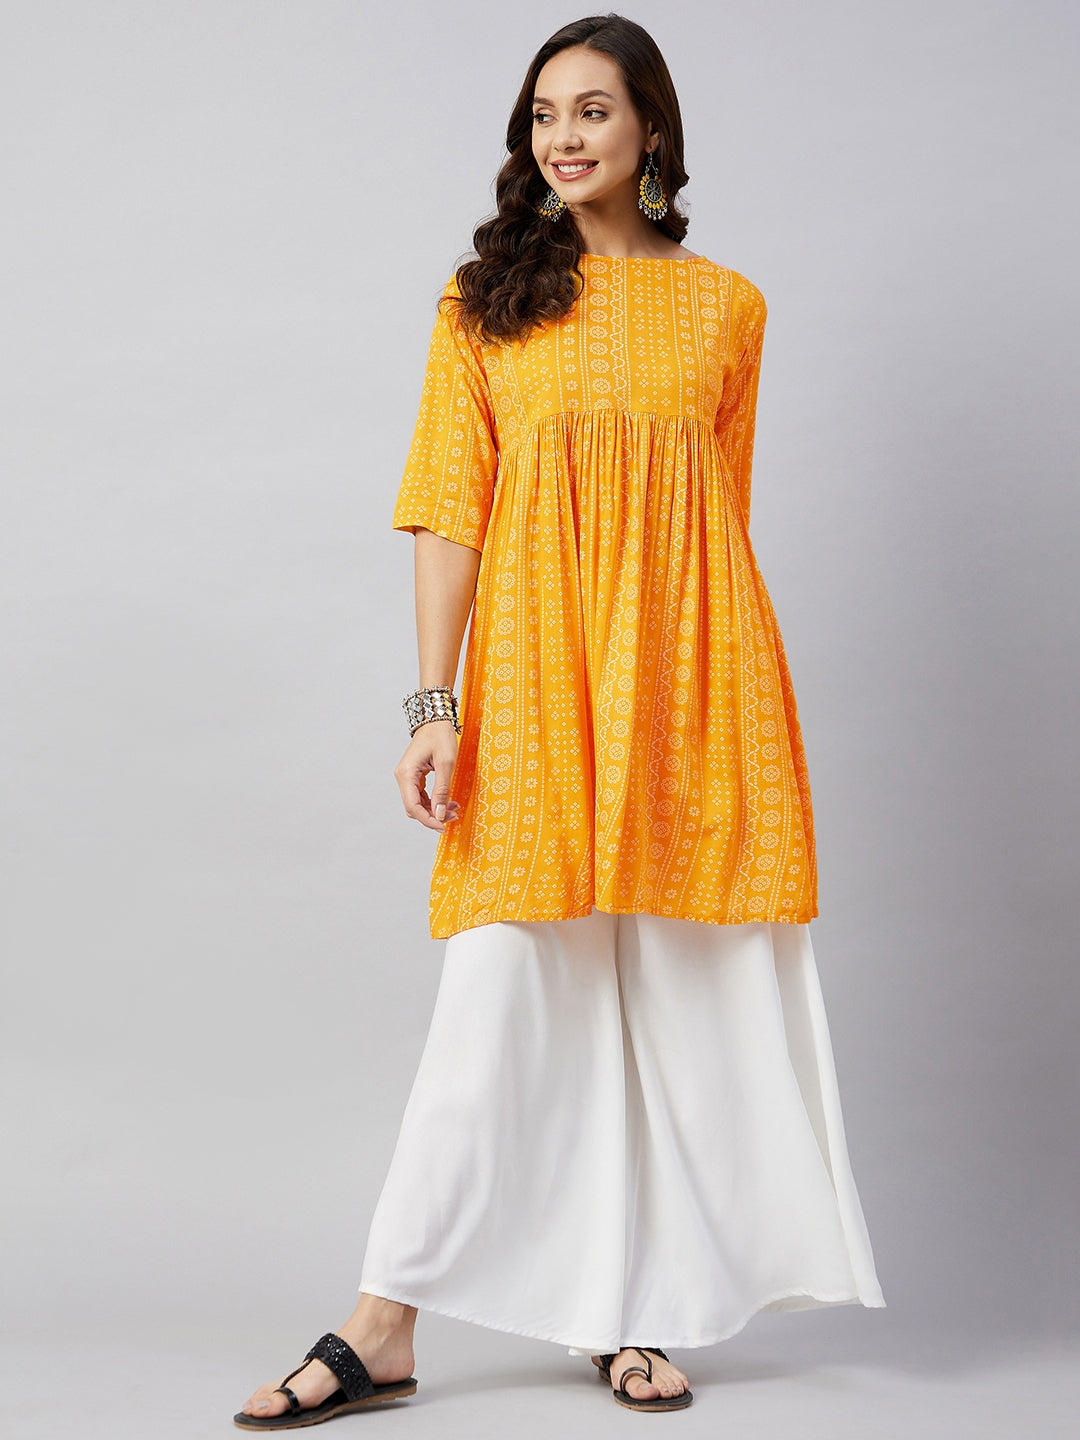 Buy Nagariya Women's Yellow Rayon Kurti with White Cotton Palazzo | L at  Amazon.in